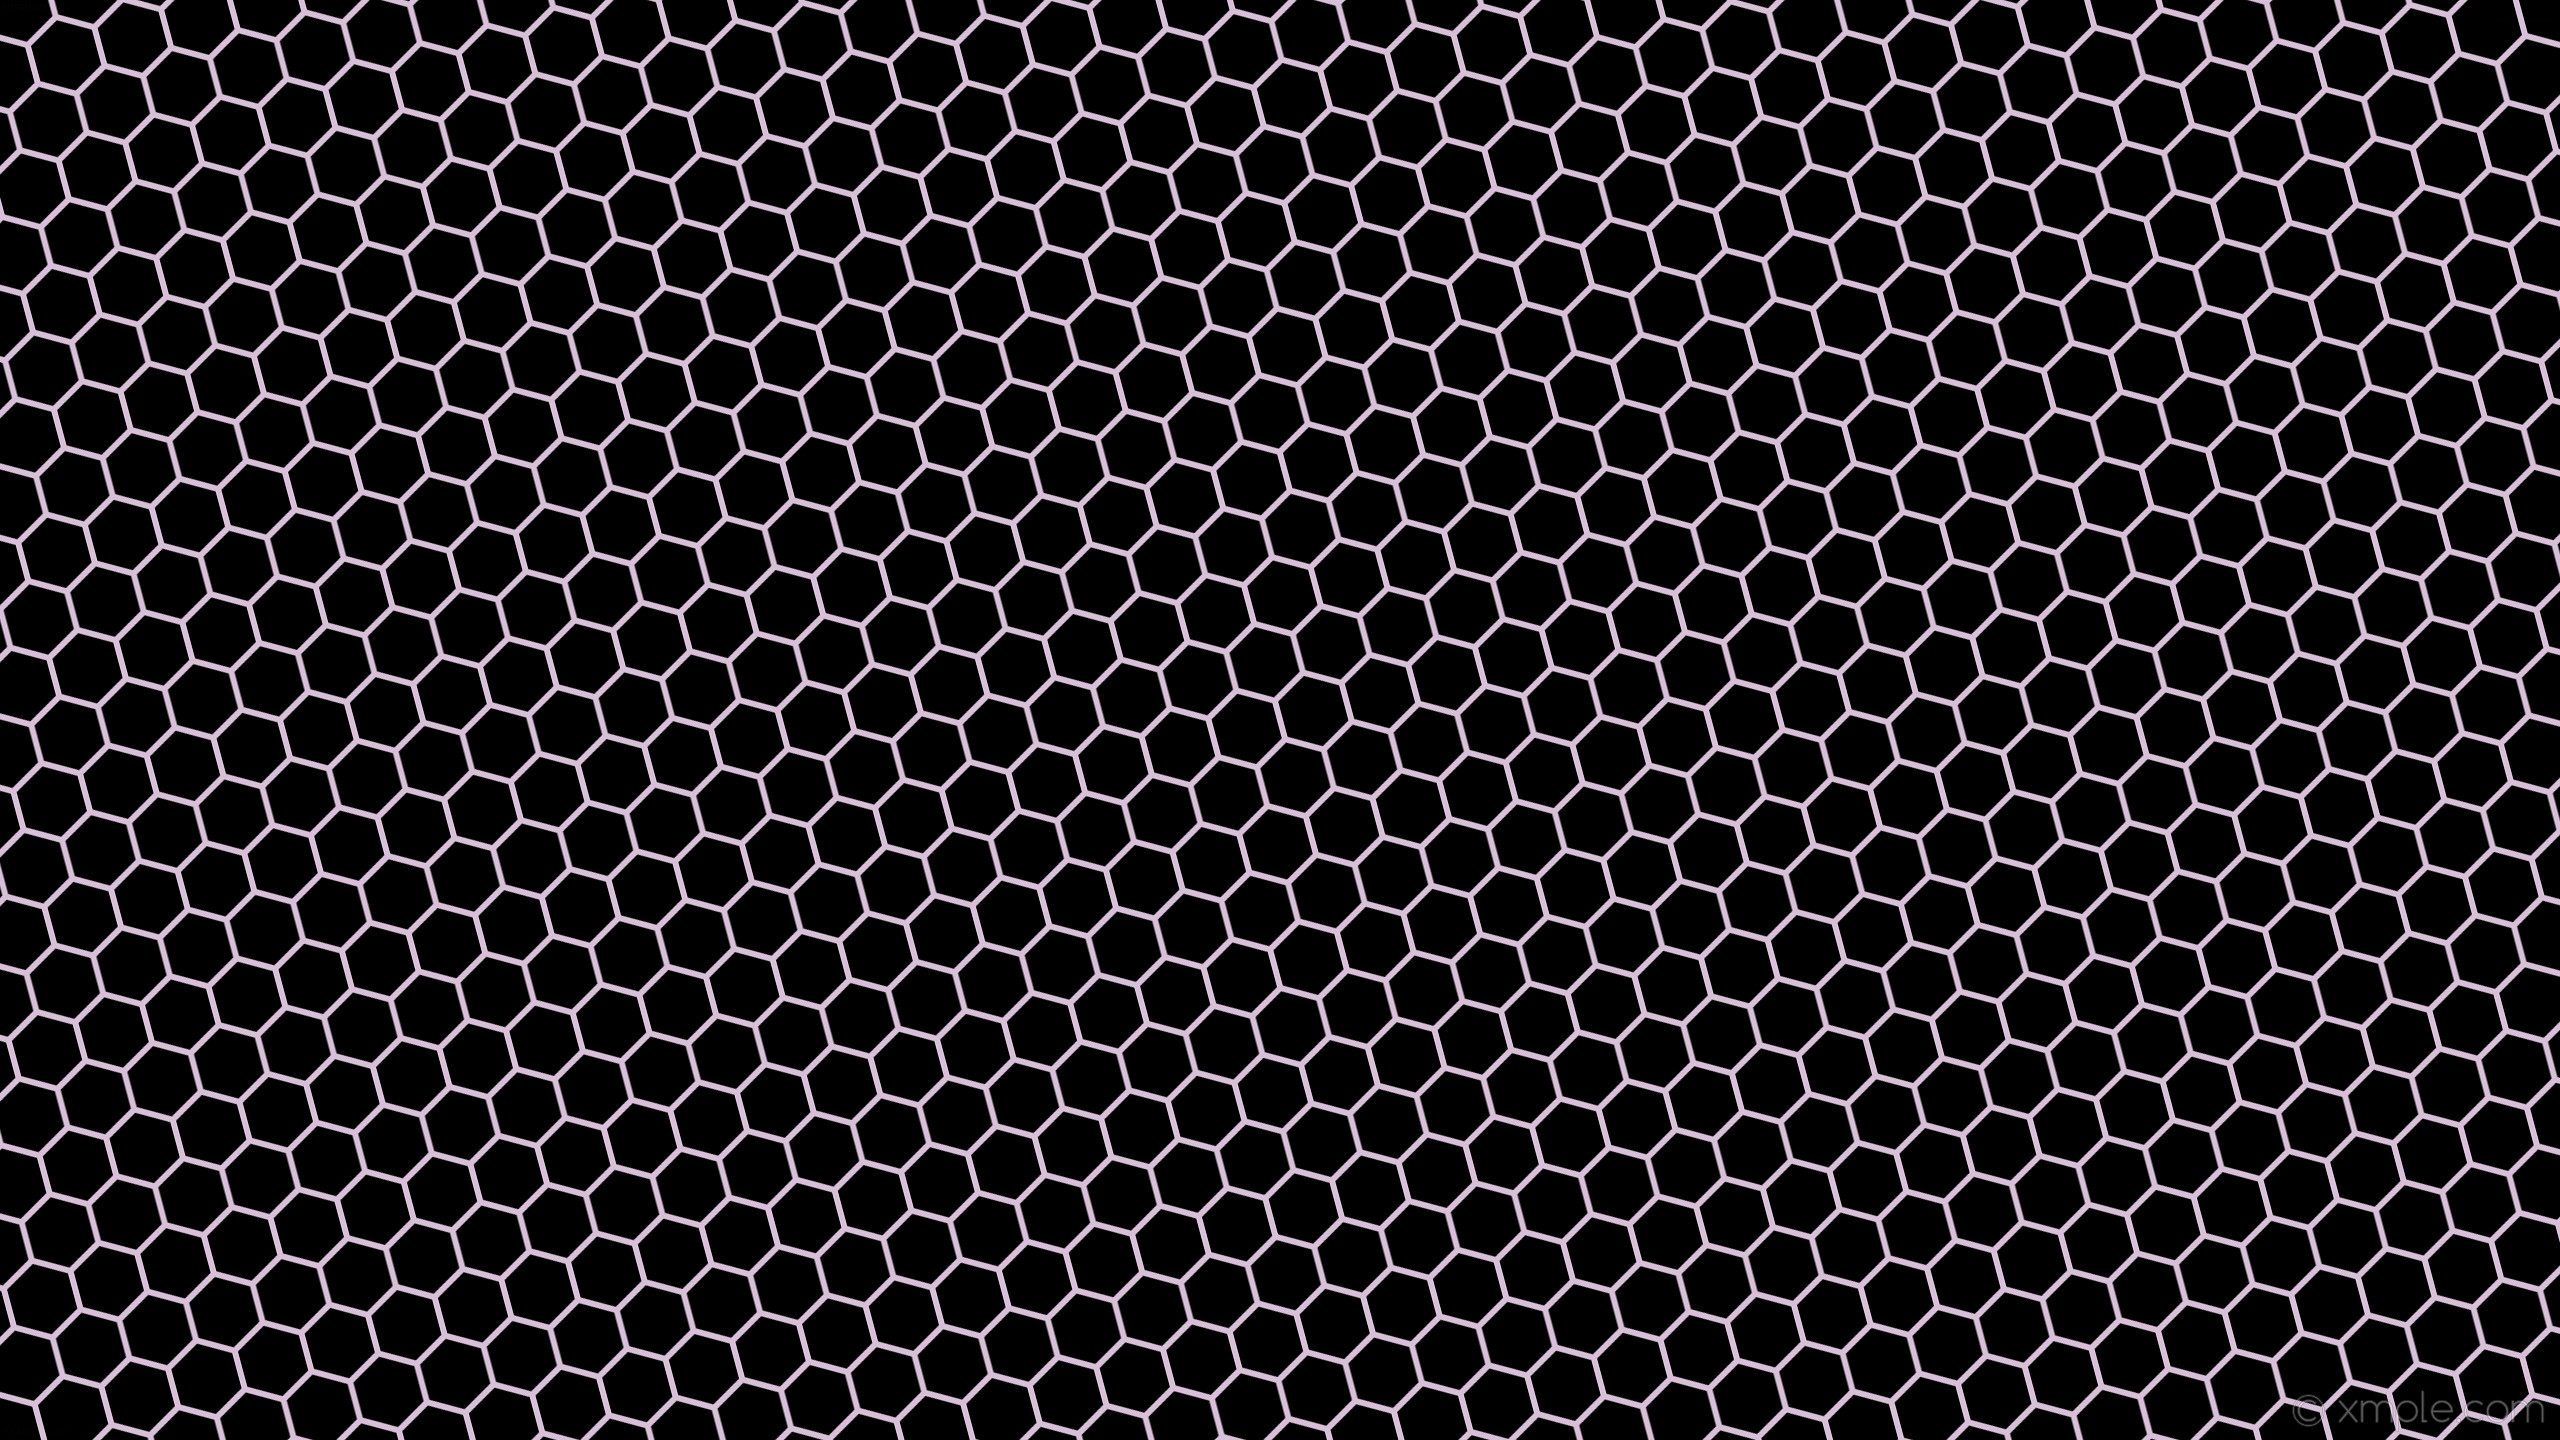 2560x1440 wallpaper beehive honeycomb black hexagon purple thistle #000000 #d8bfd8  diagonal 15Â° 6px 69px